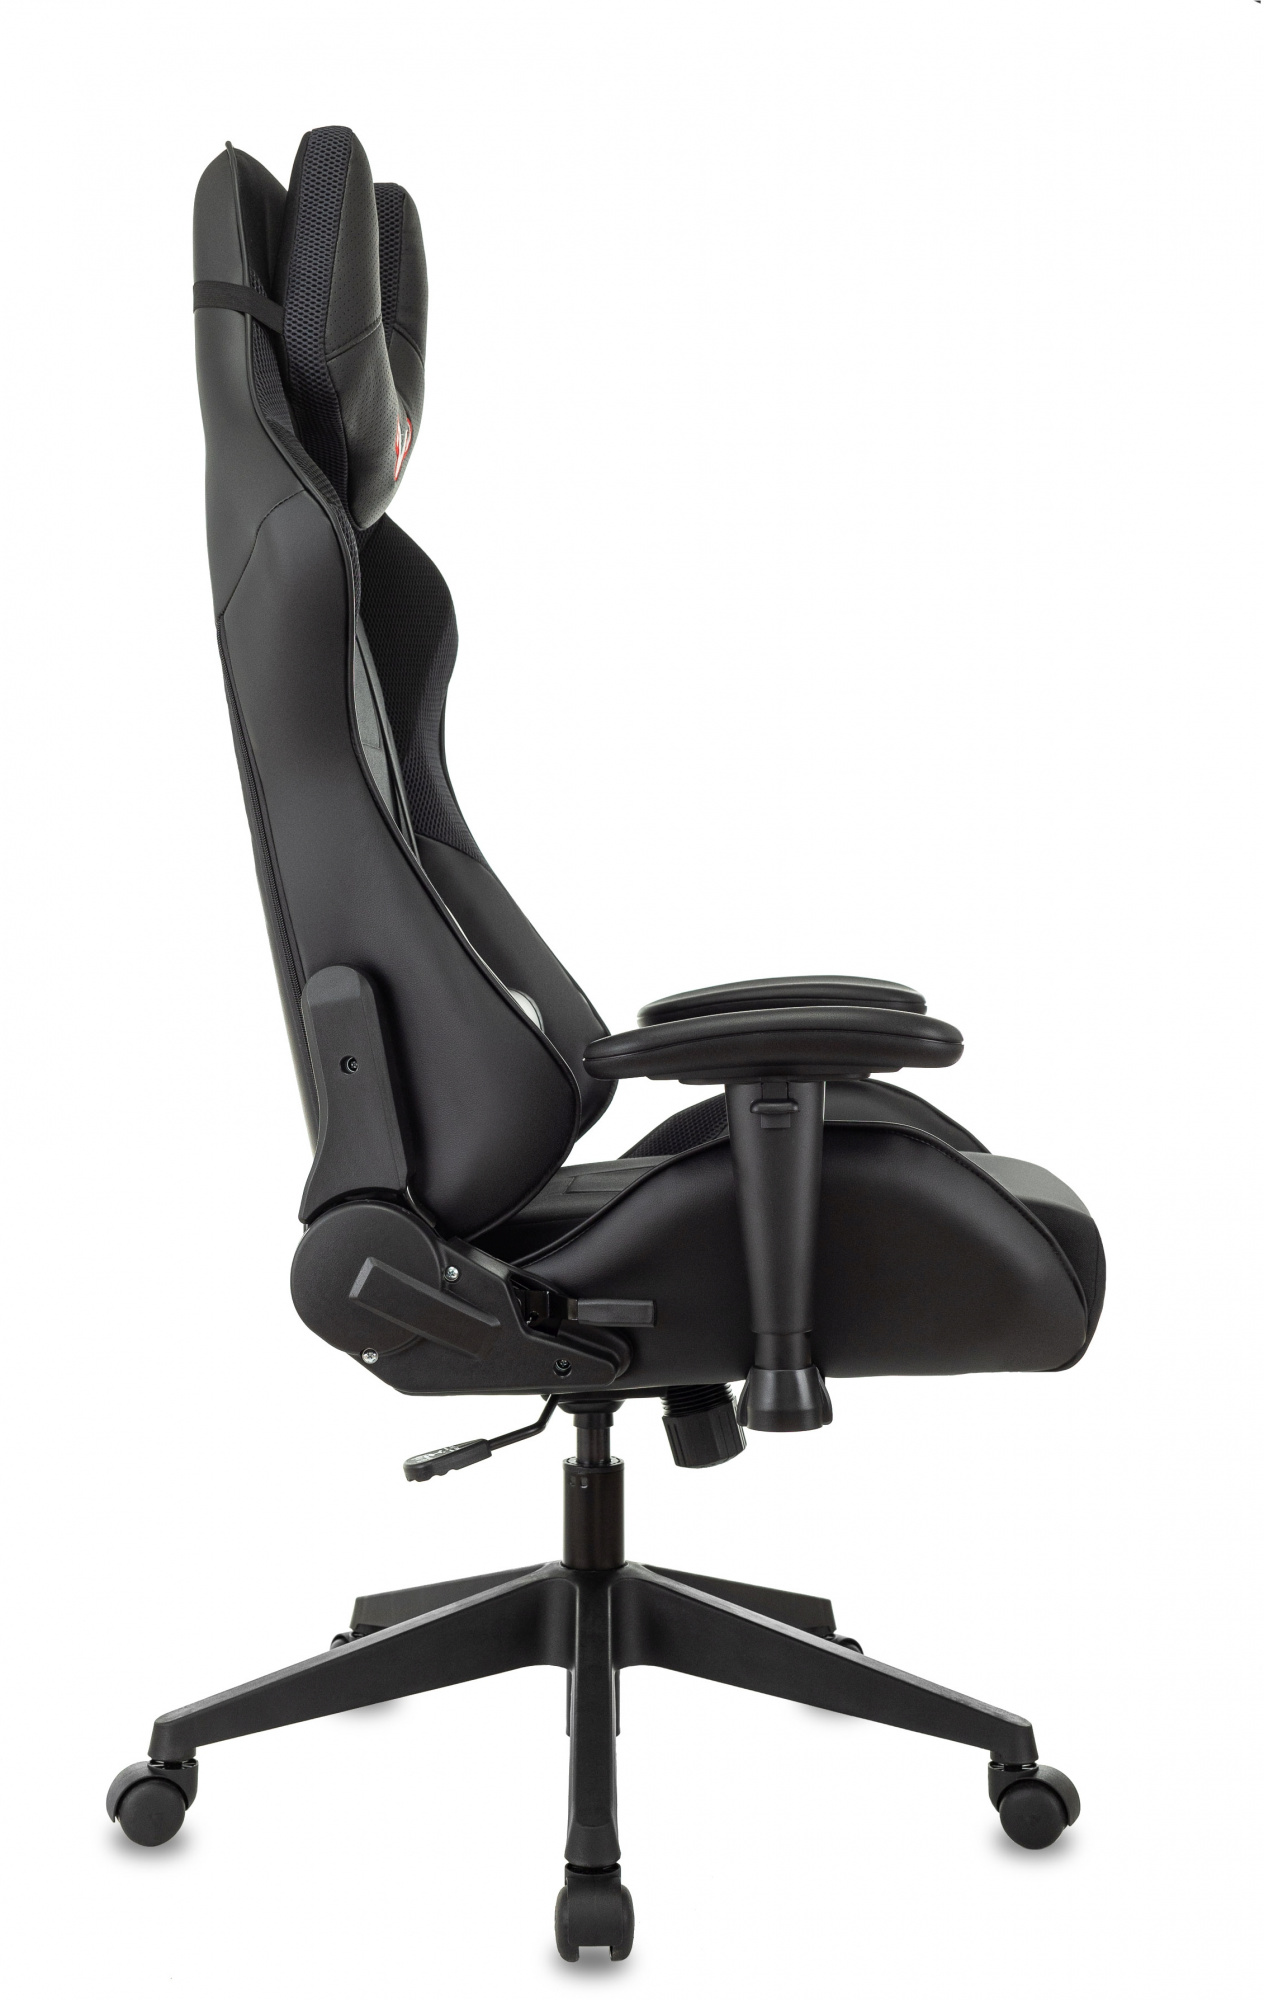 Кресло игровое Zombie VIKING 4 AERO, обивка: ткань/экокожа, цвет: черный (VIKING 4 AERO BLACK) от магазина Buro.store